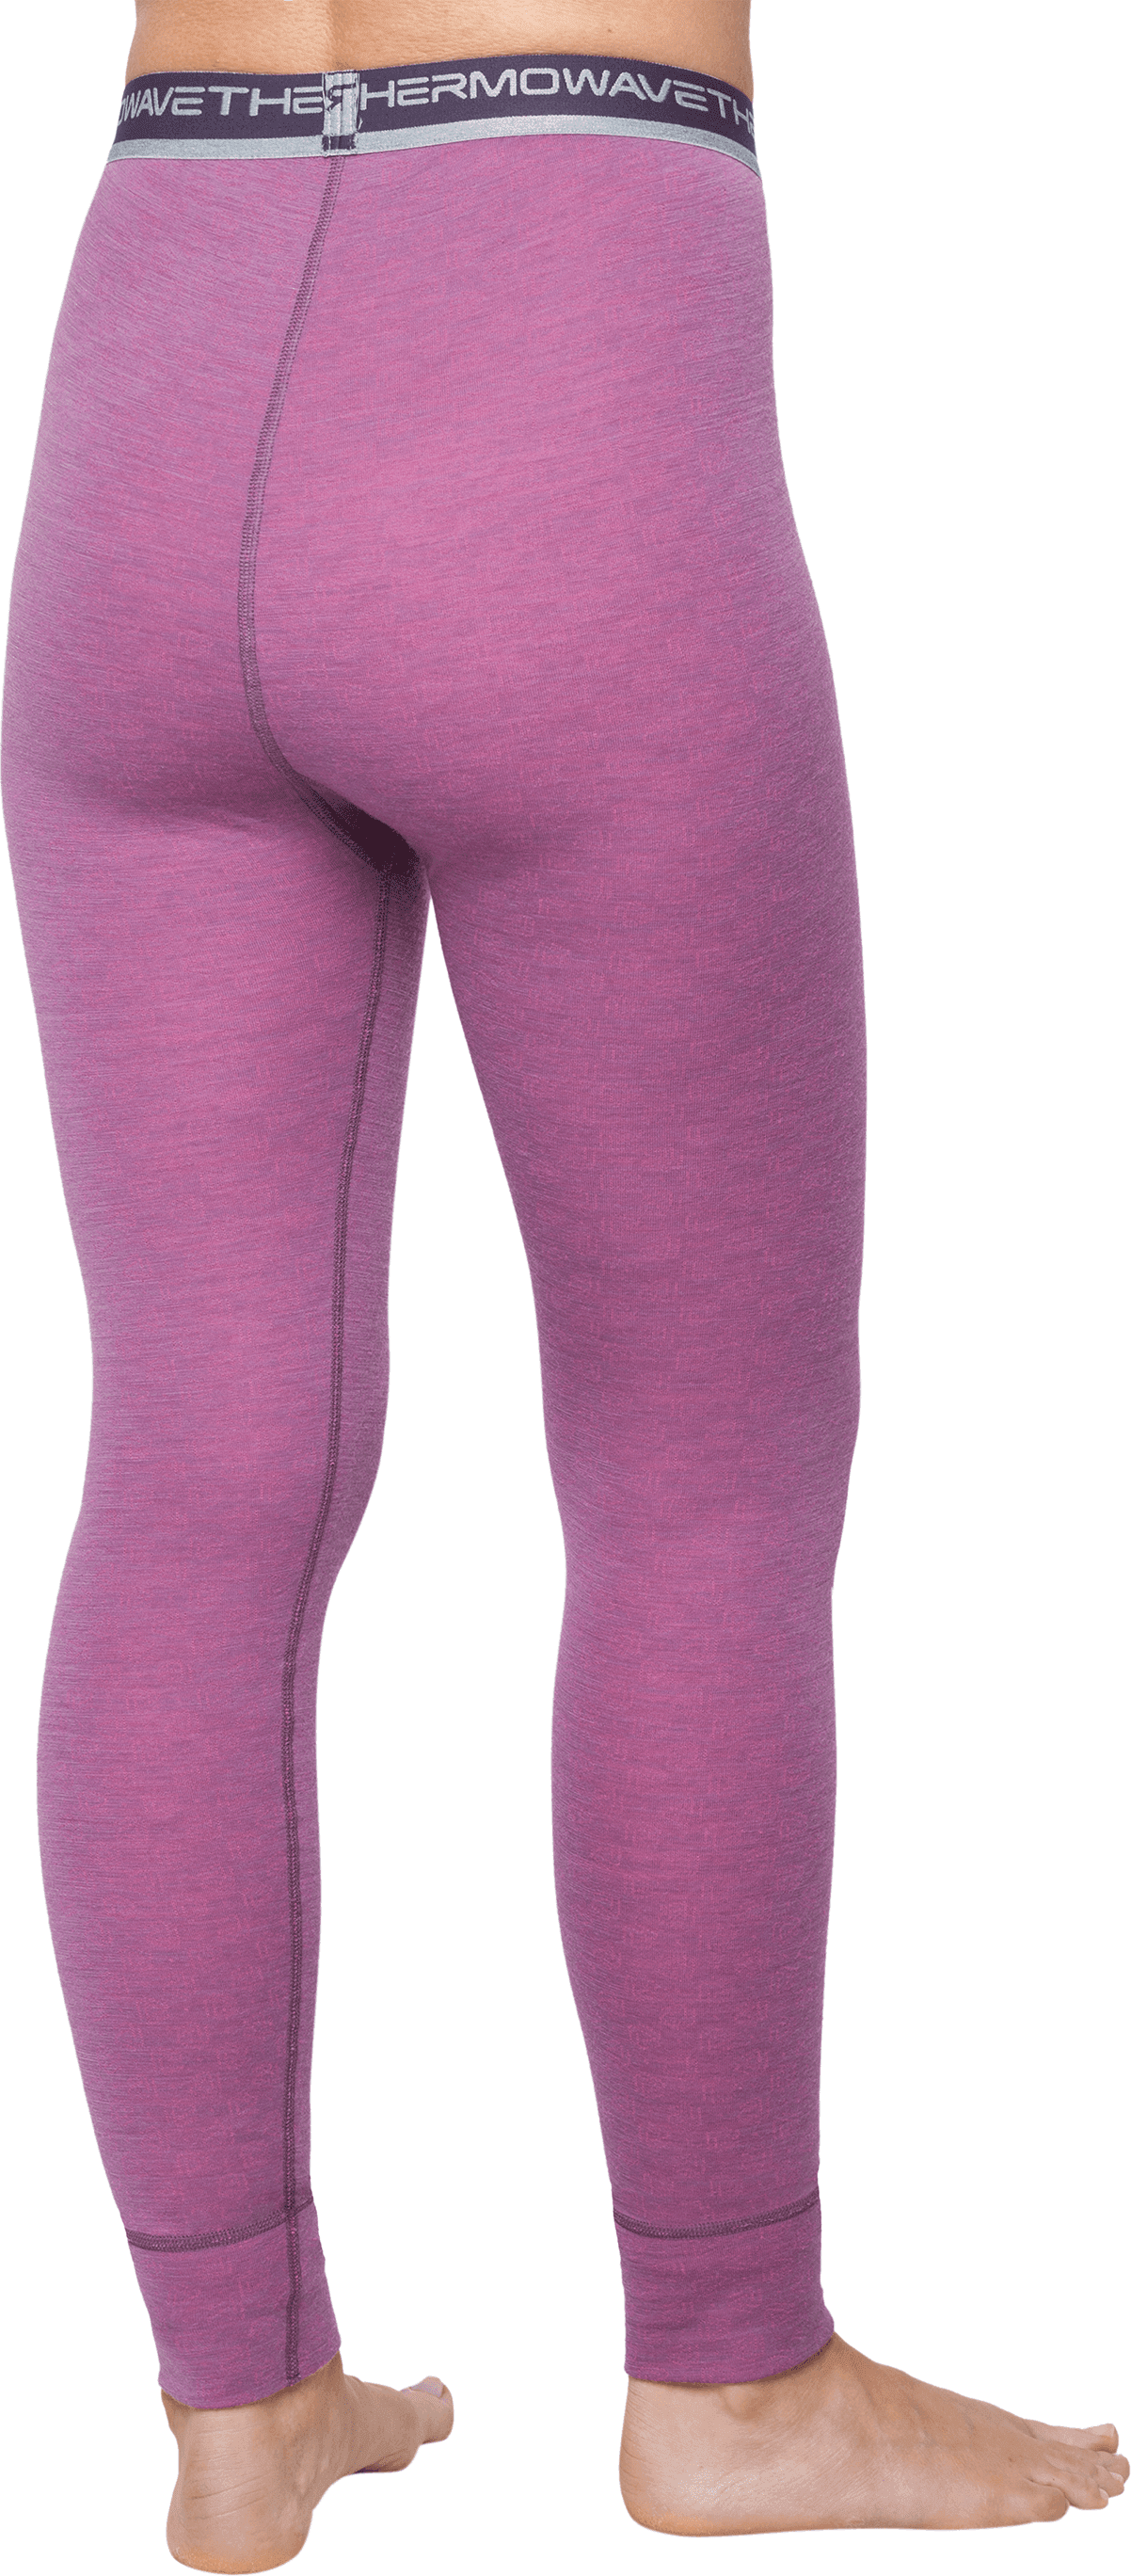 THERMOWAVE - MERINO XTREME / Womens Merino Wool Thermal Pants / Silver Grey  Melange - Medium 